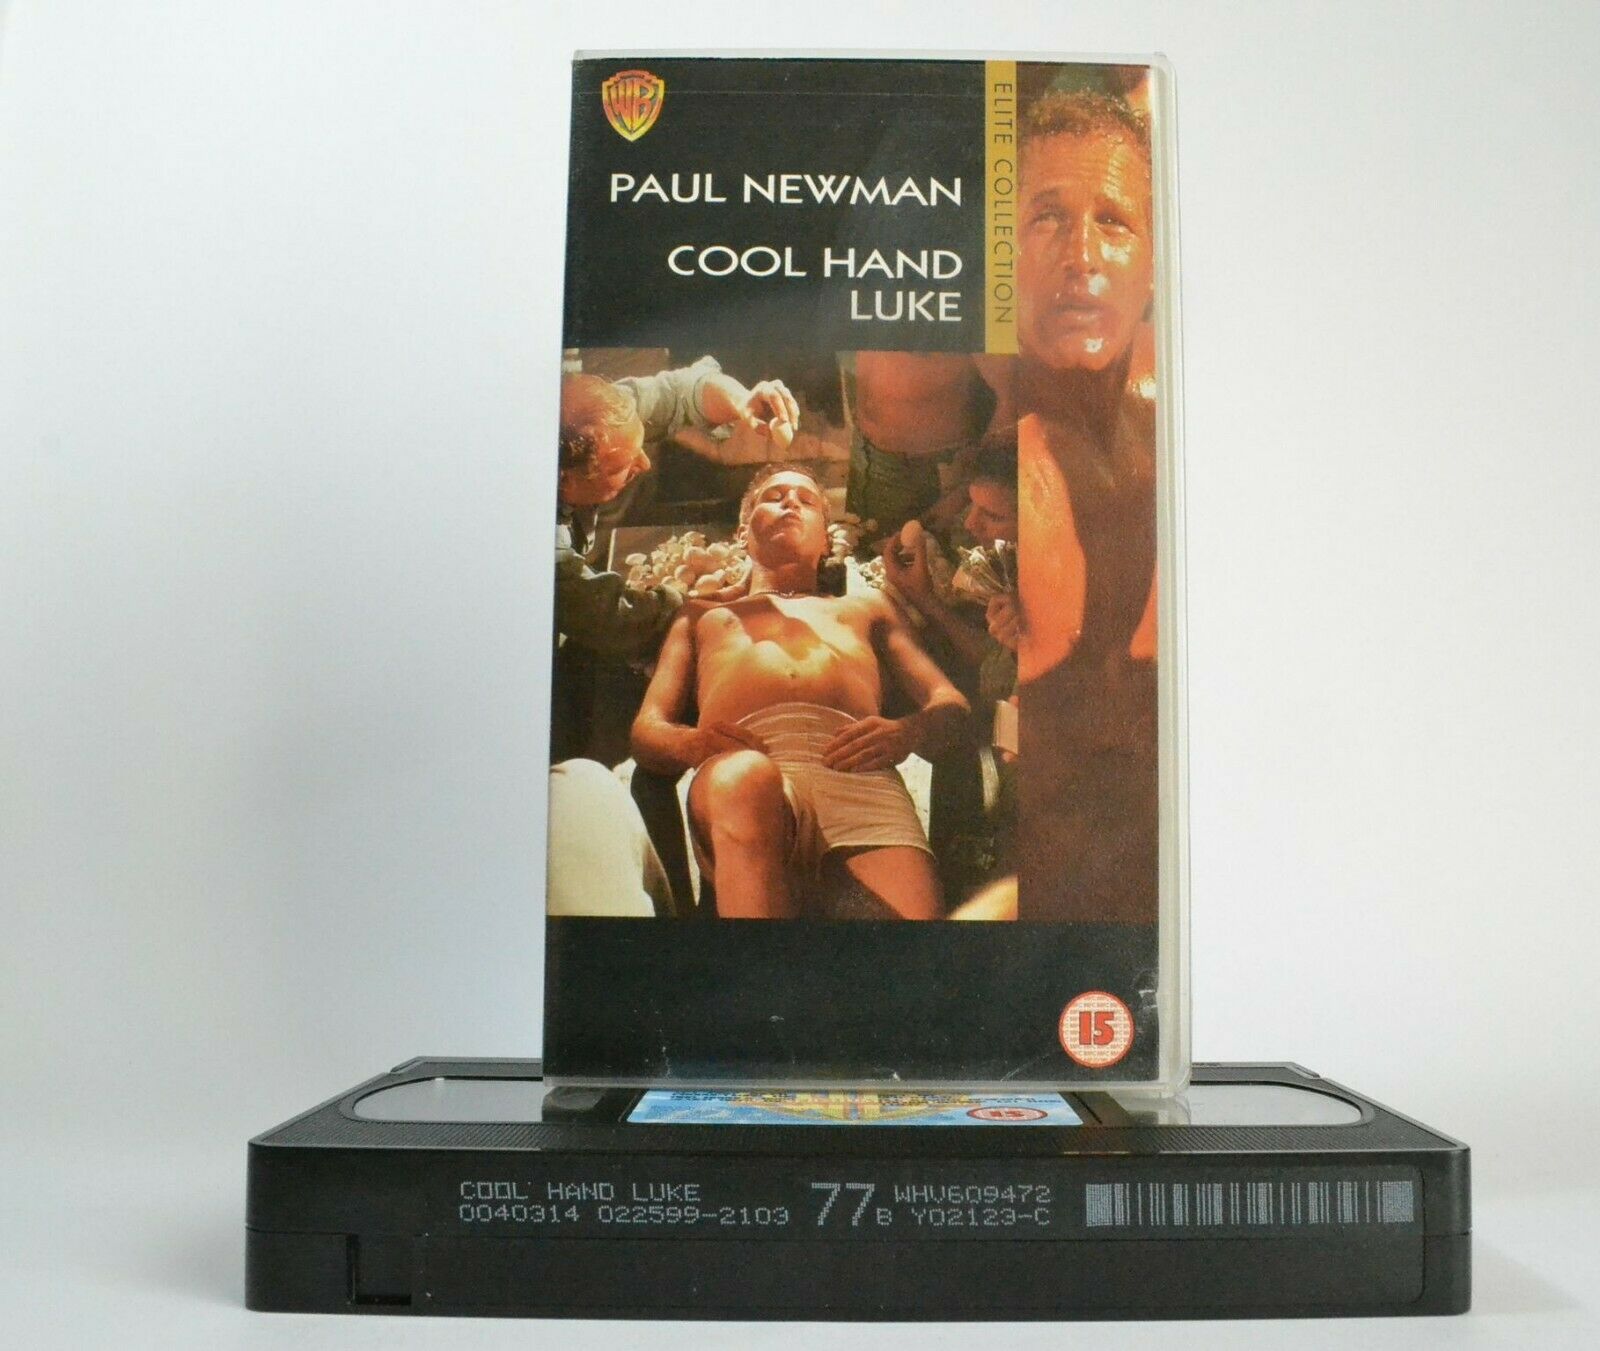 Cool Hand Luke (1967); [Elite Collection] - Crime Drama - Paul Newman - Pal VHS-